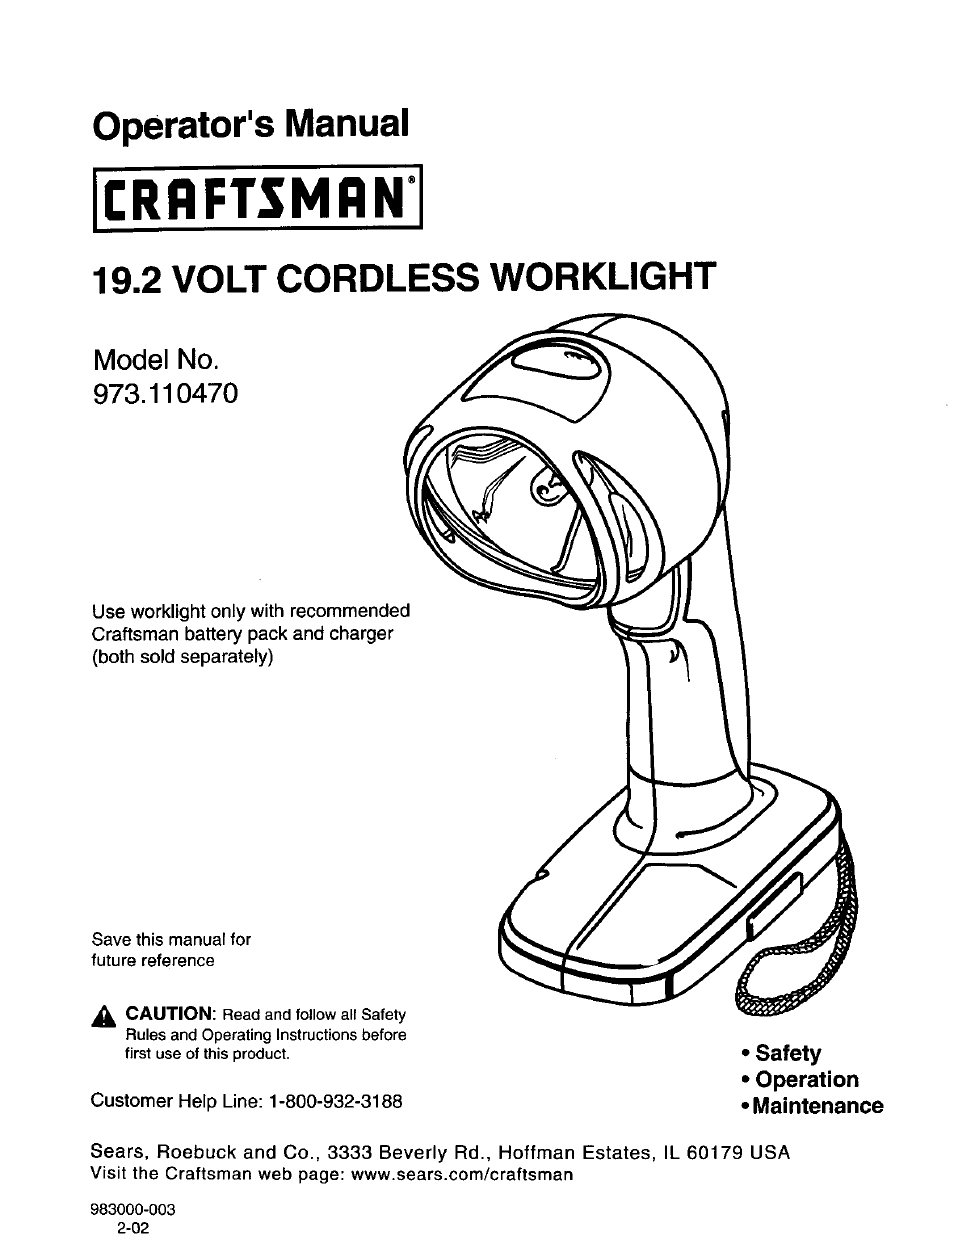 Craftsman 973.110470 User Manual | 16 pages